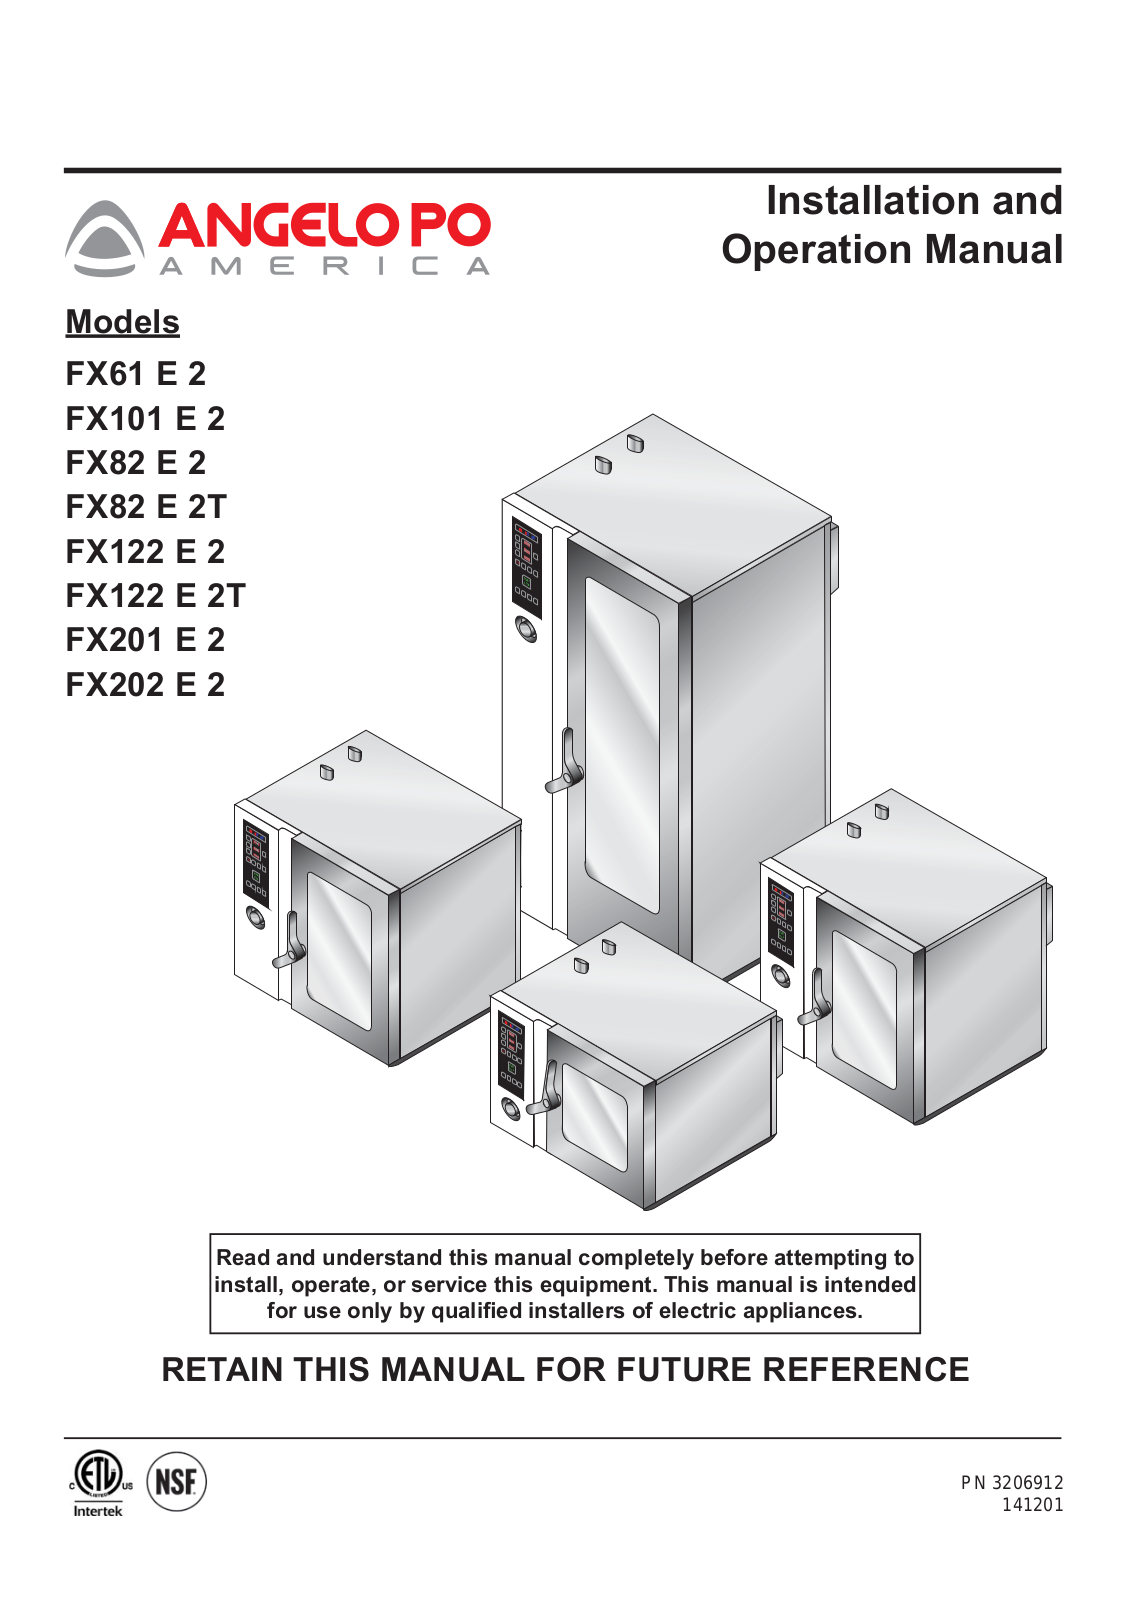 Angelo Po FX101E2 Installation  Manual